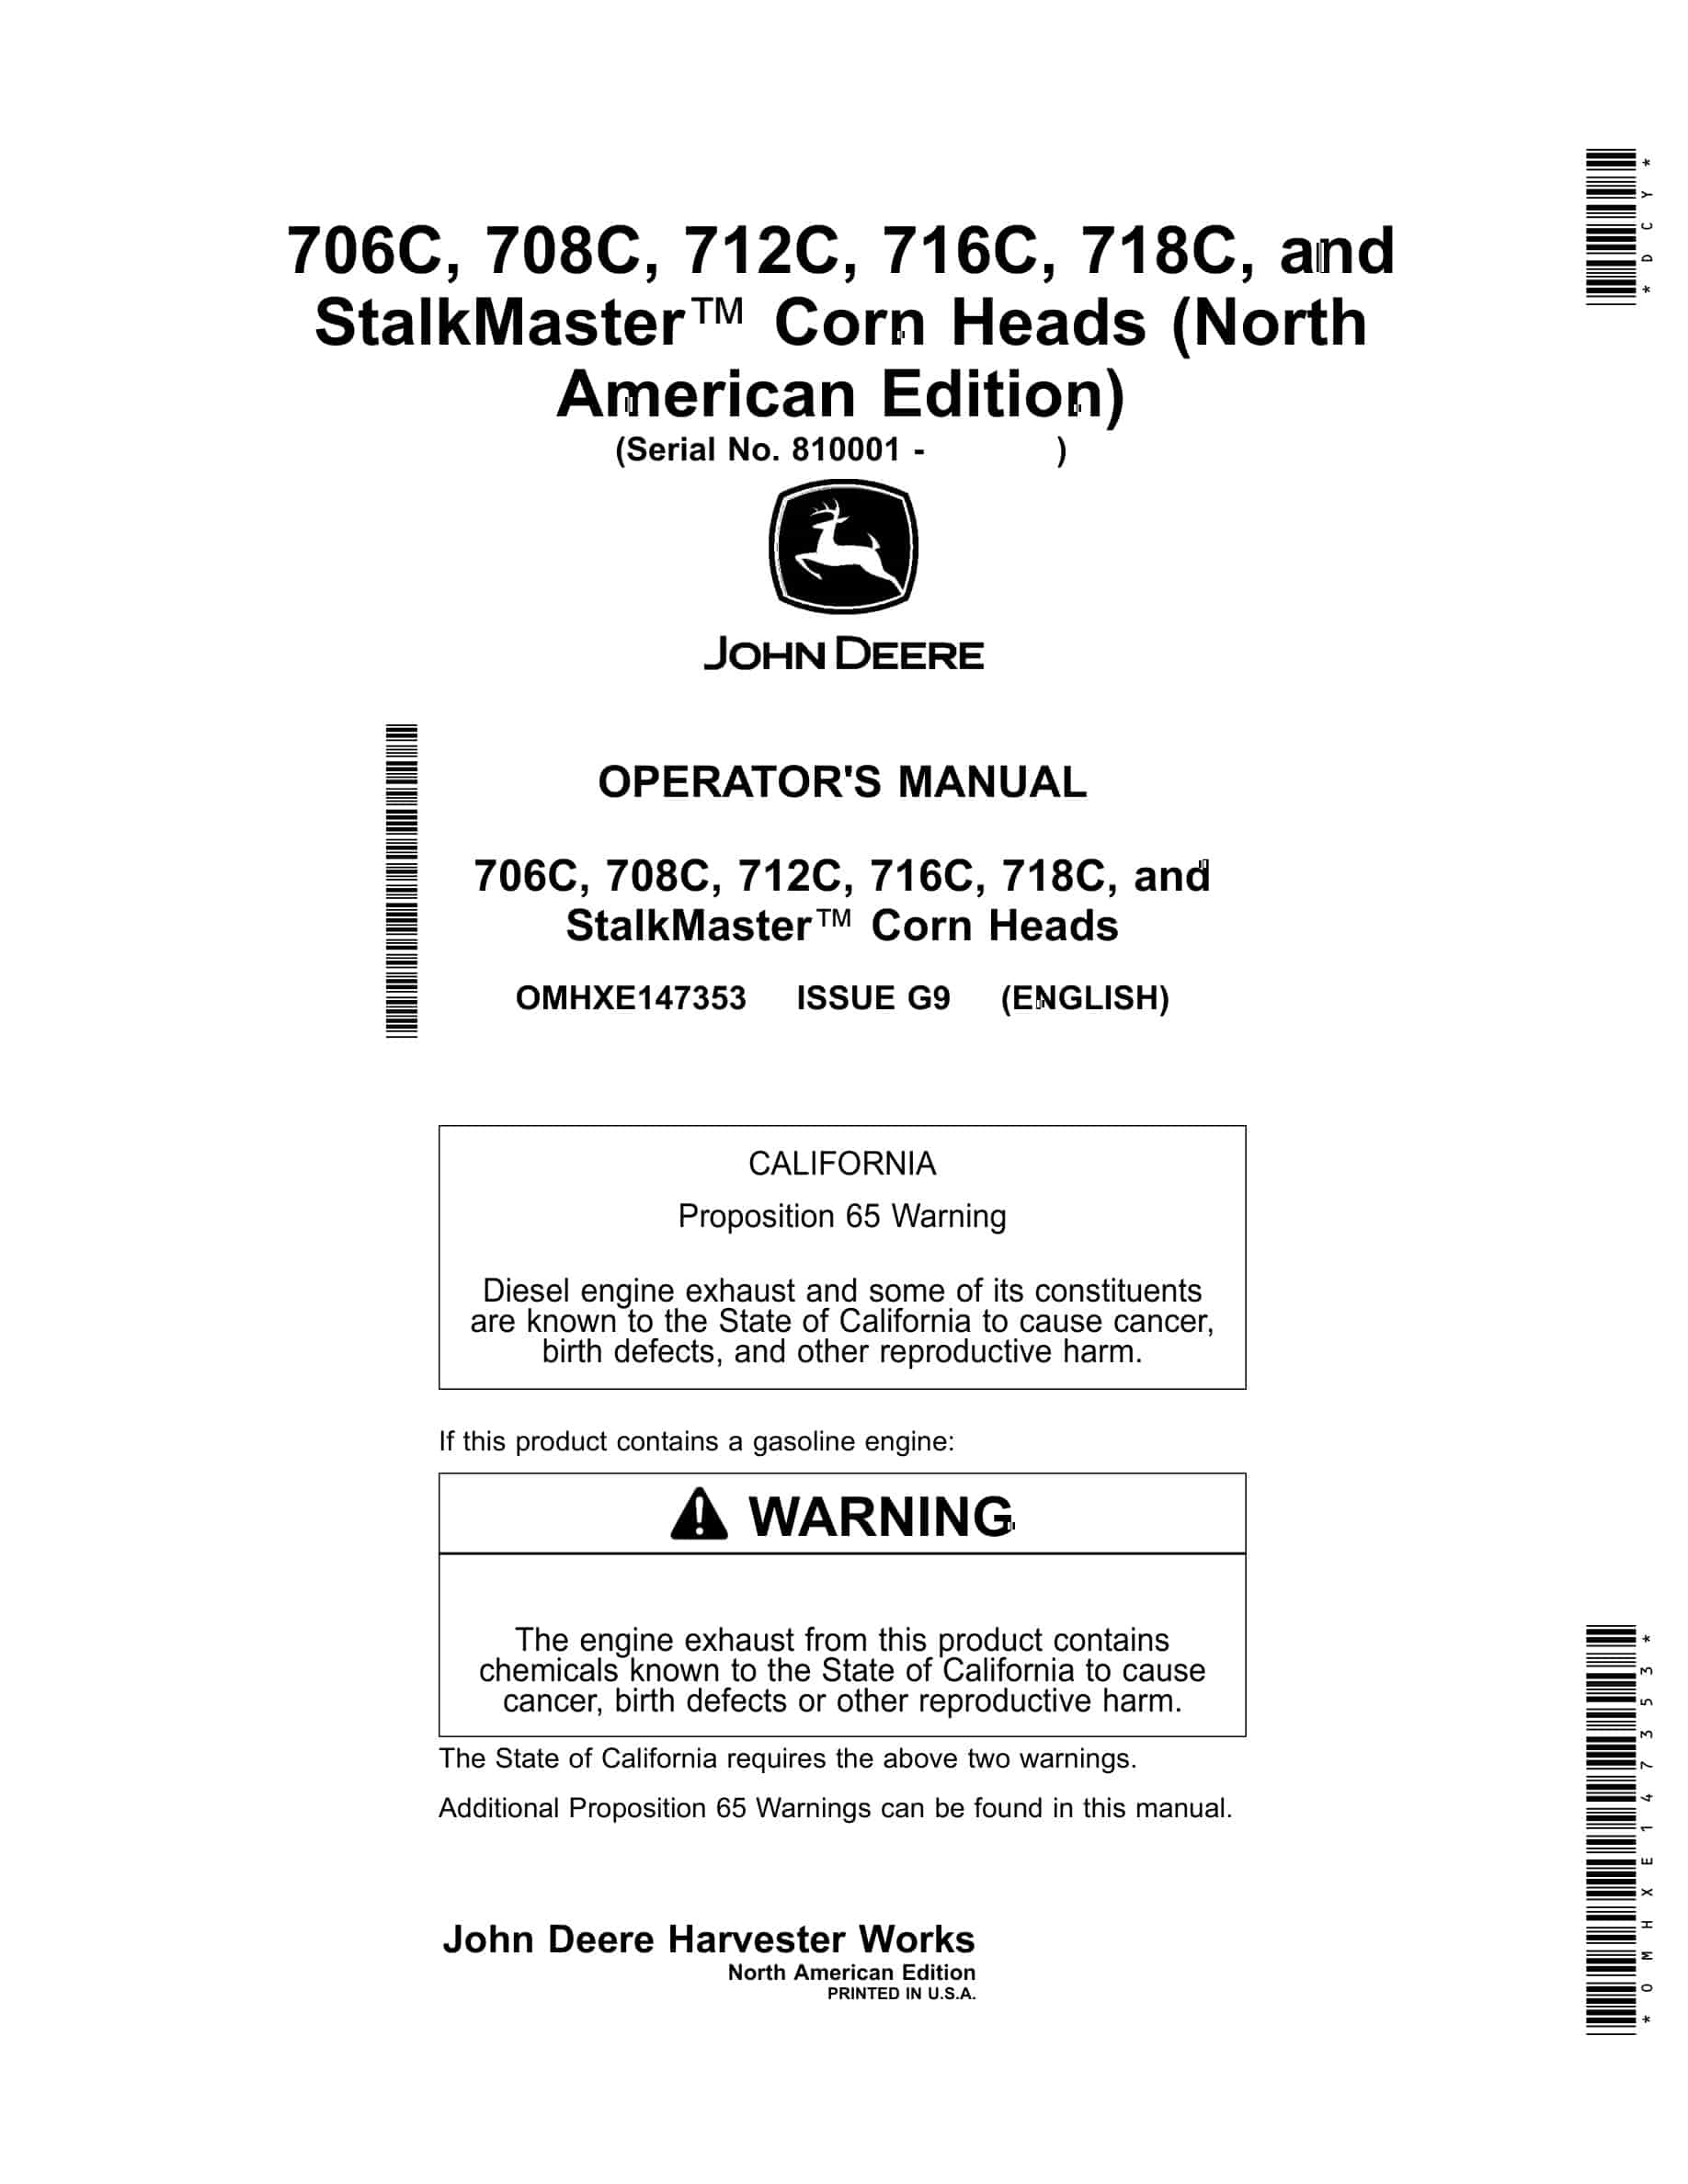 John Deere 706C, 708C, 712C, 716C, 718C, and StalkMaster Corn Heads Operator Manual OMHXE147353-1